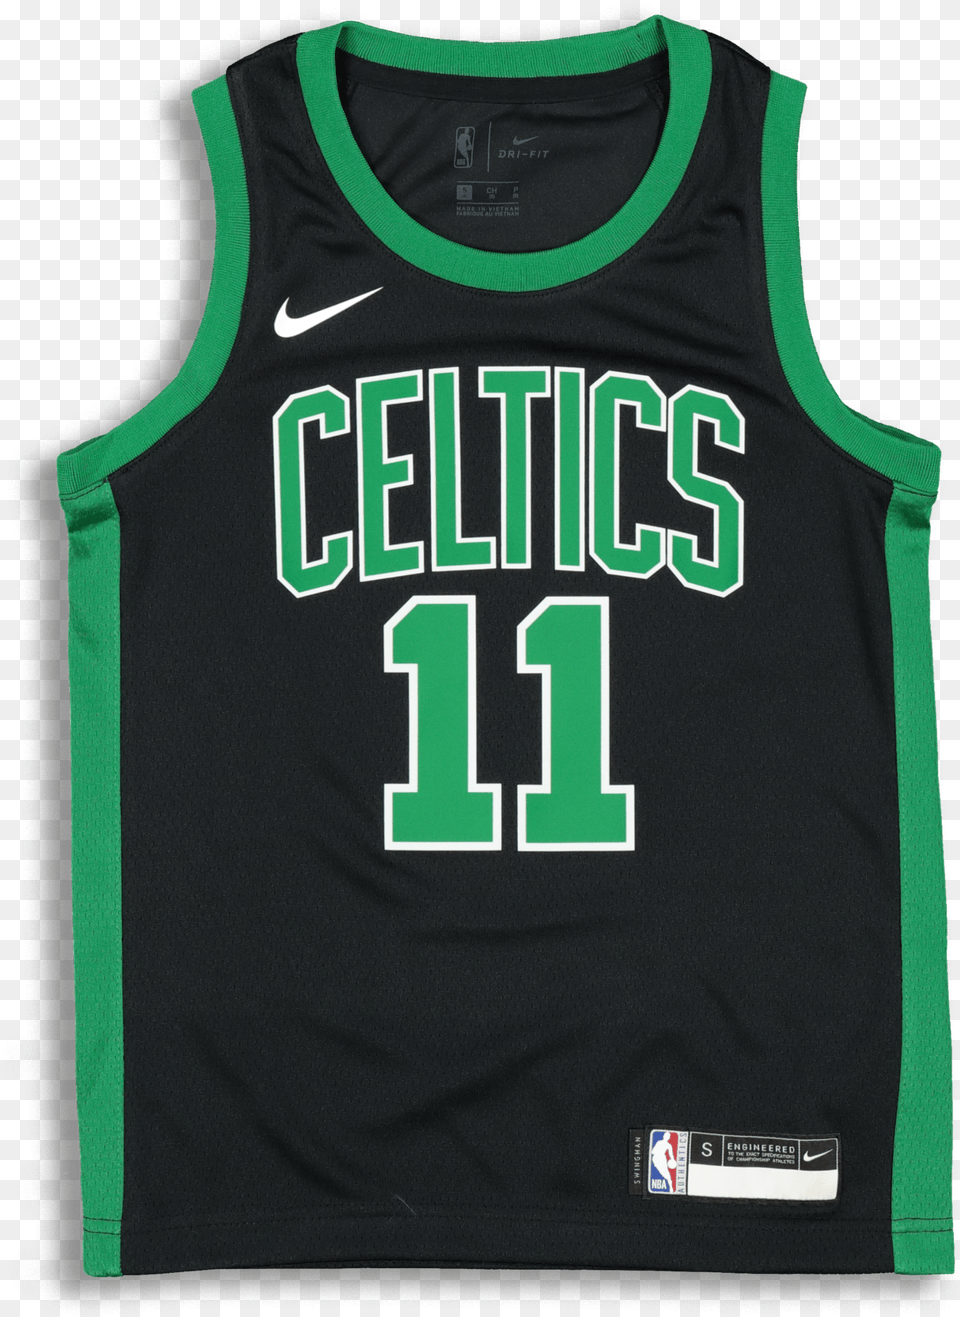 Boston Celtics Jersey 2019, Clothing, Shirt, T-shirt Png